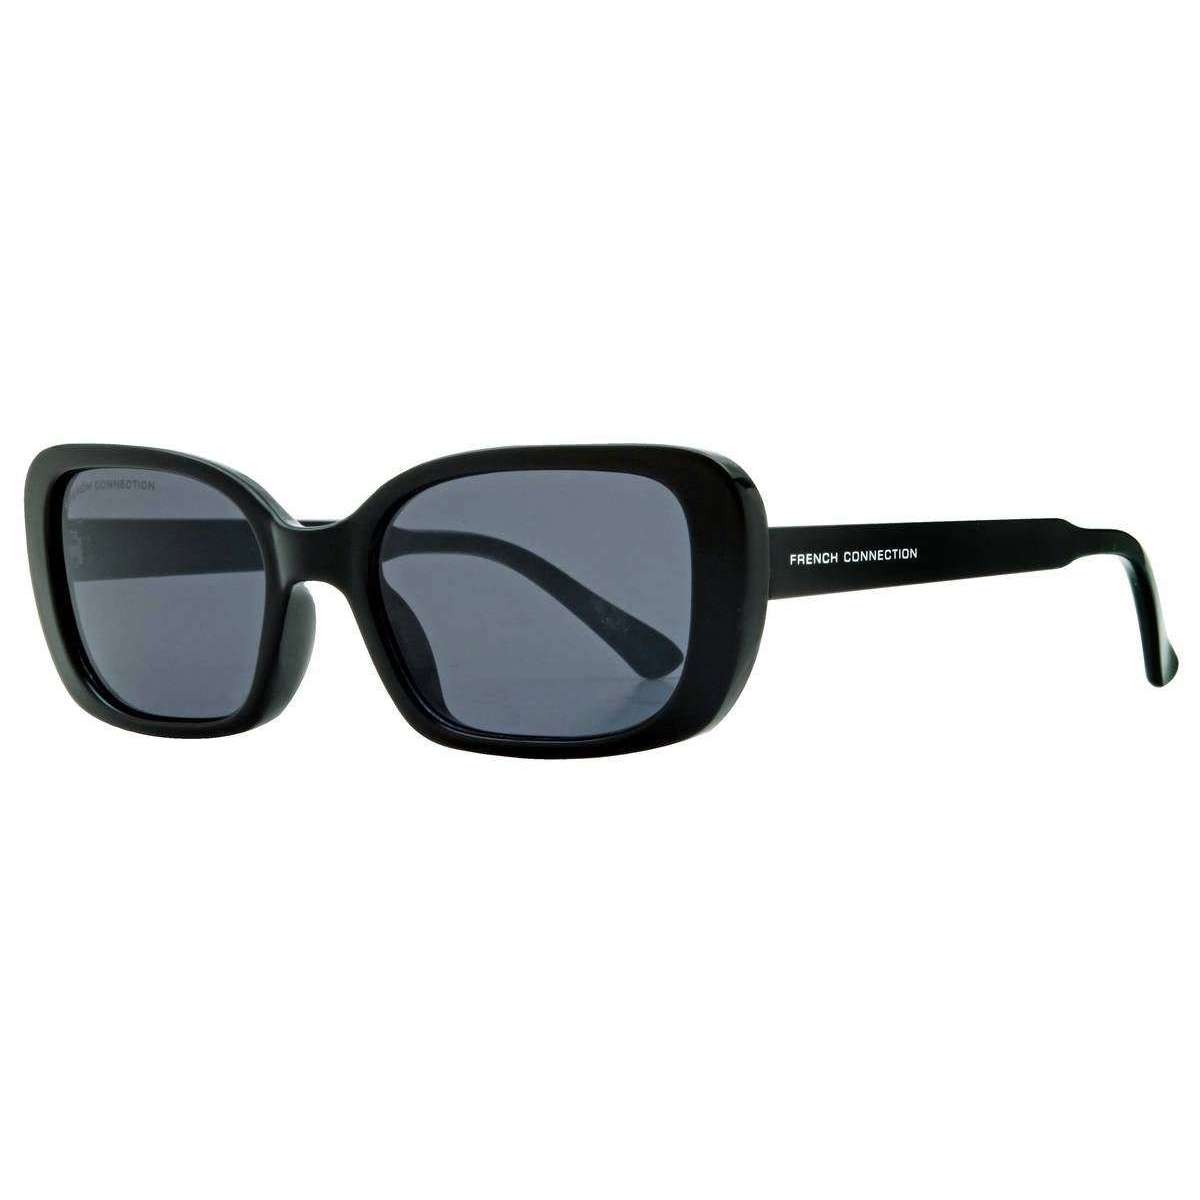 French Connection Rectangle Sunglasses - Shiny Black/Smoke Grey